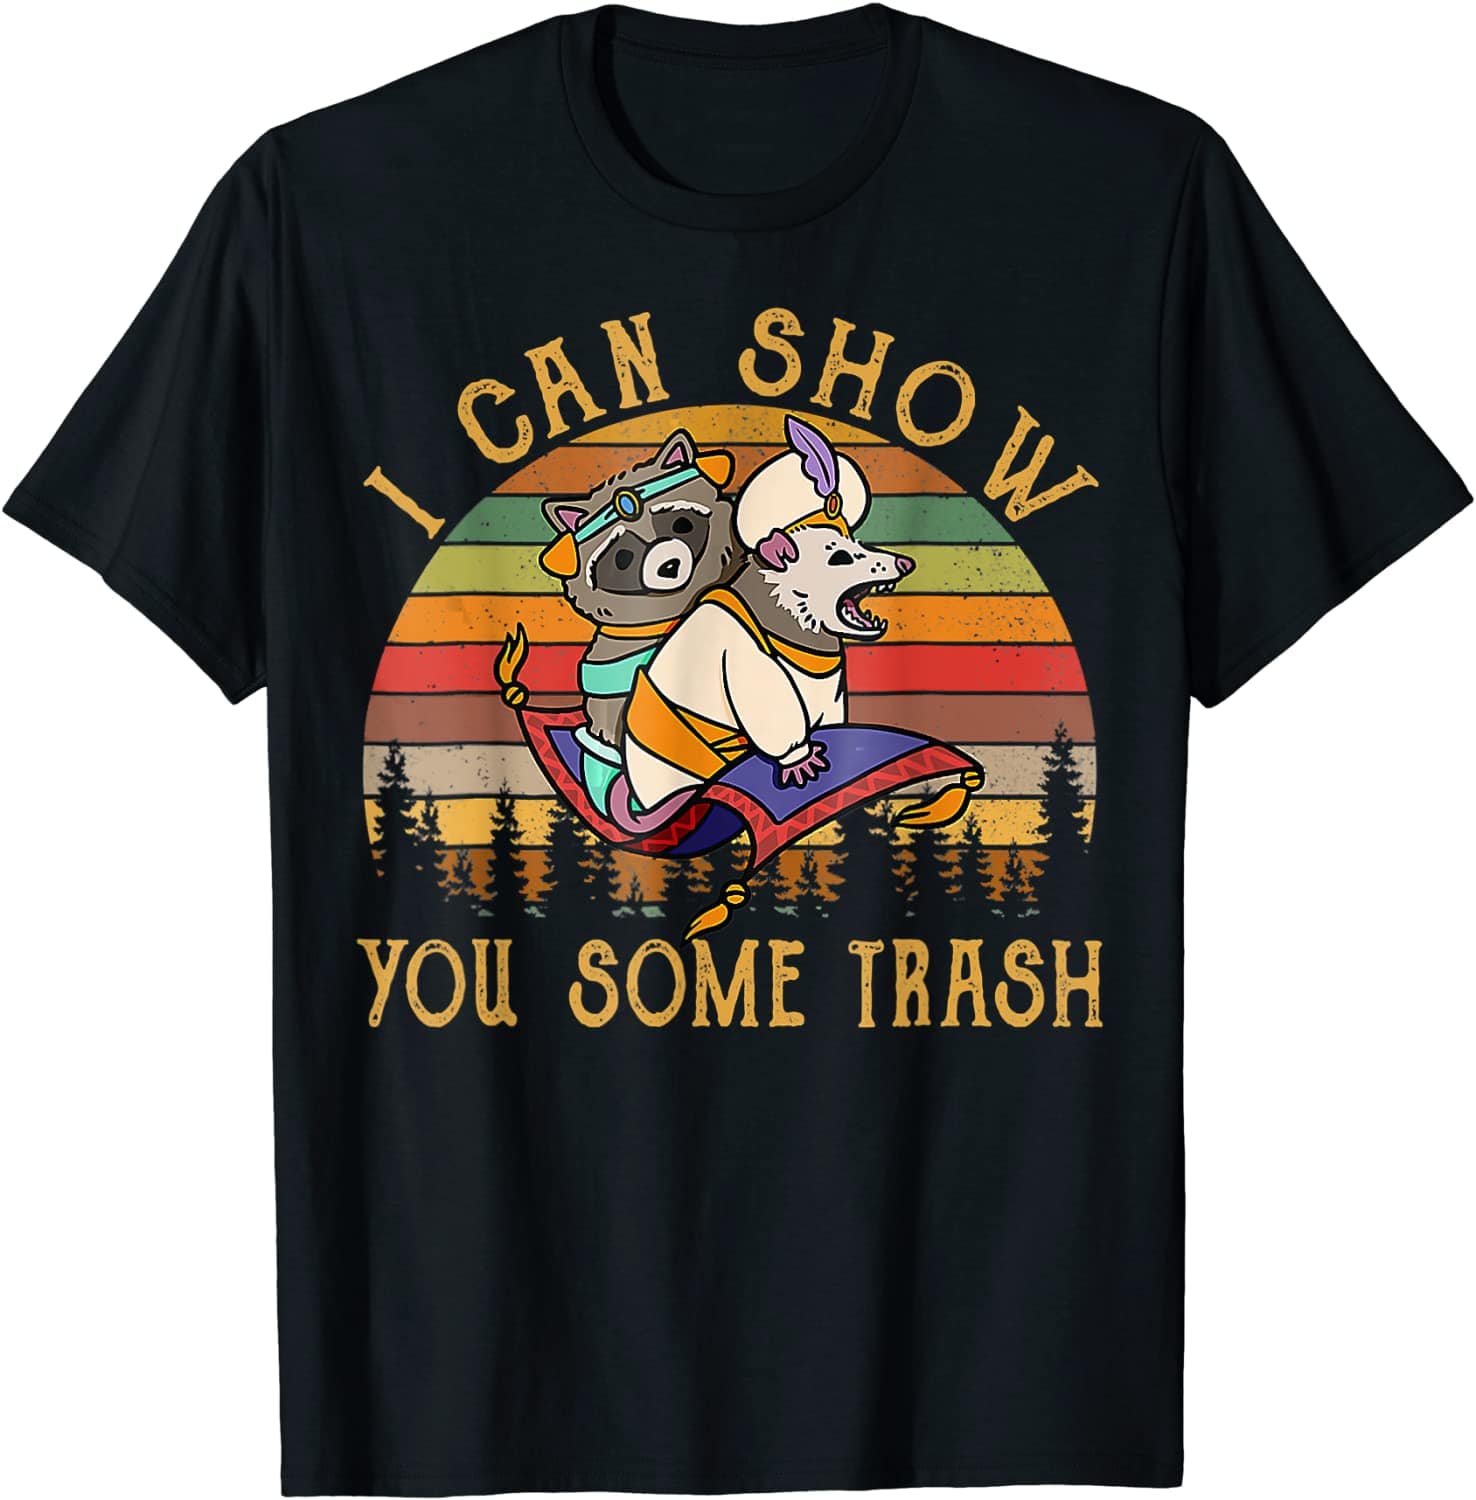 I Can Show You Some Trash Racoon Possum Vintage Shirt